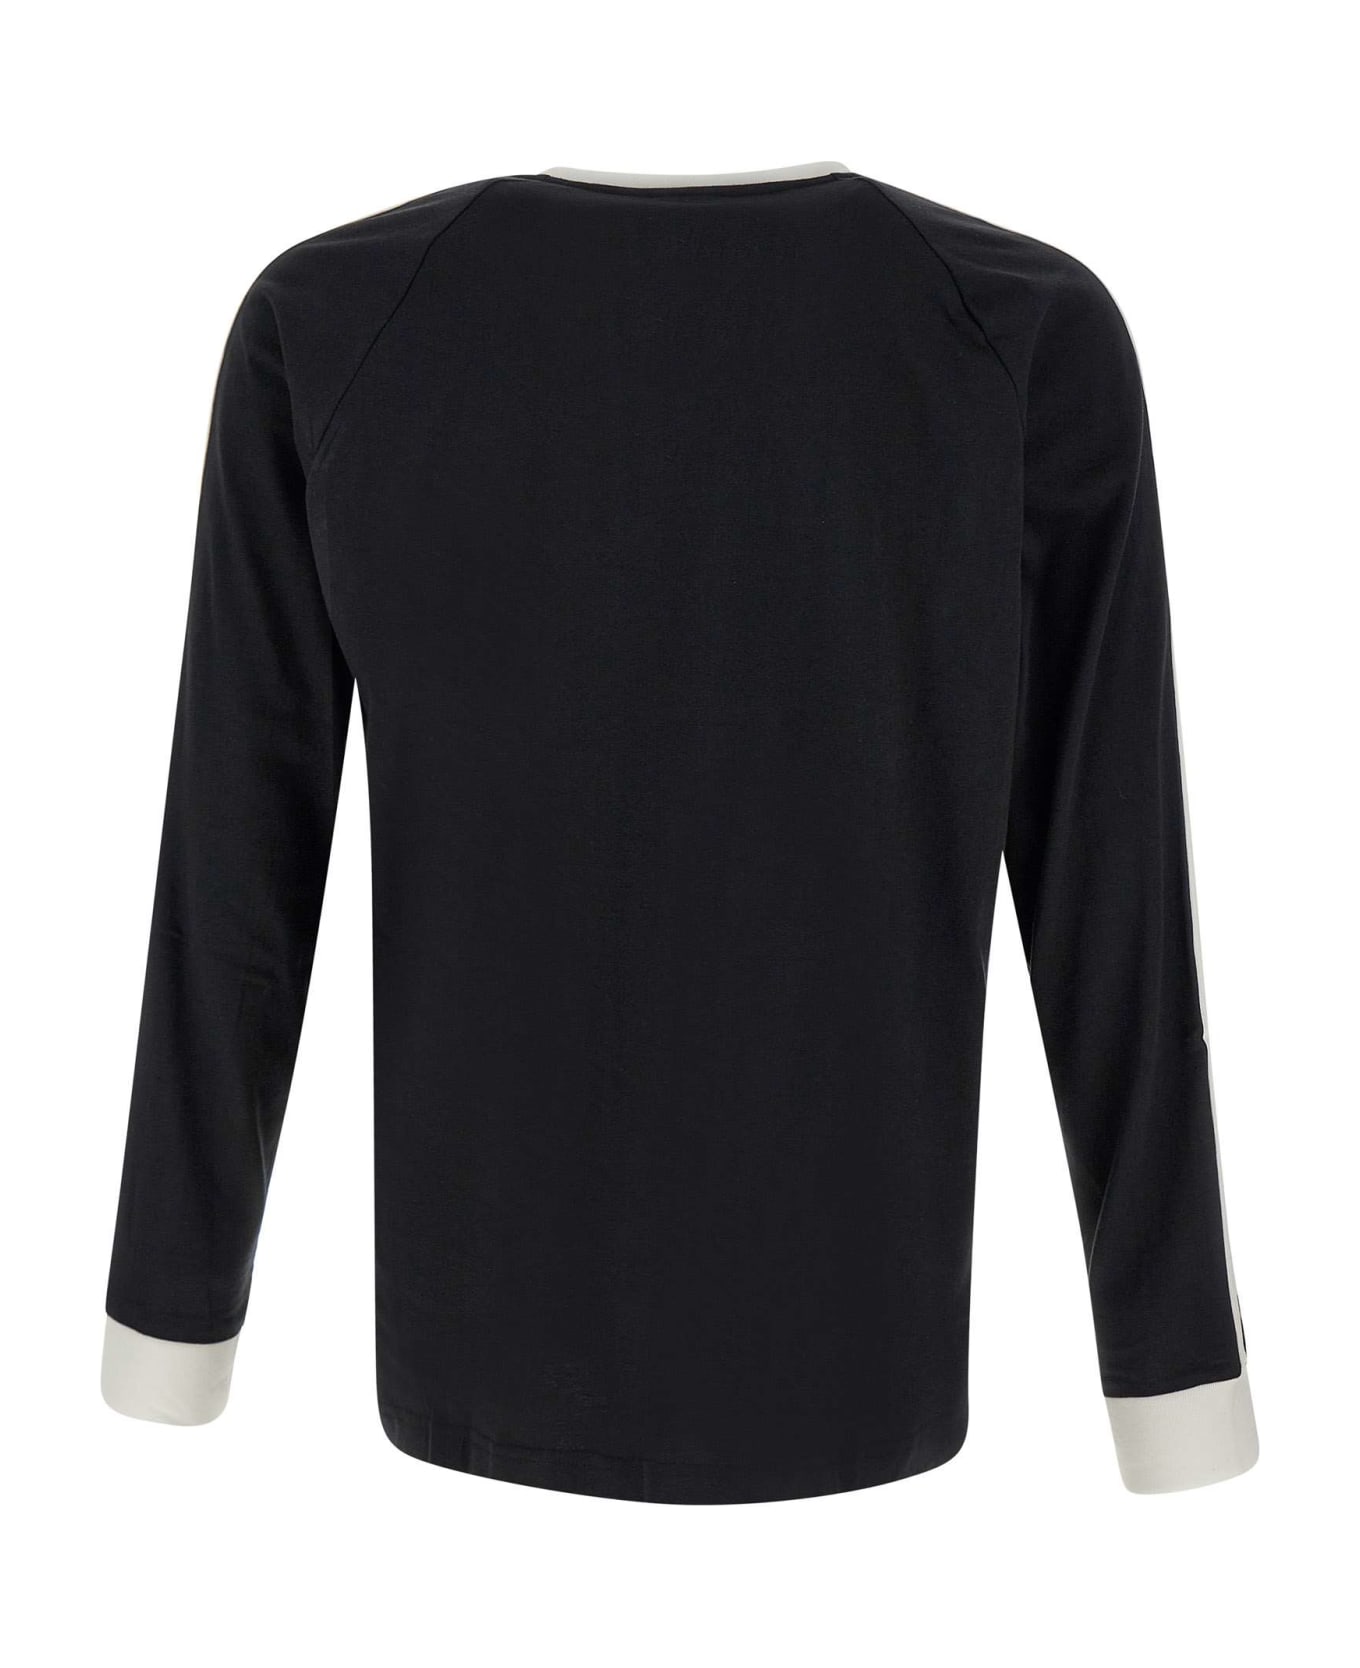 Adidas "flames" Cotton Sweater - BLACK